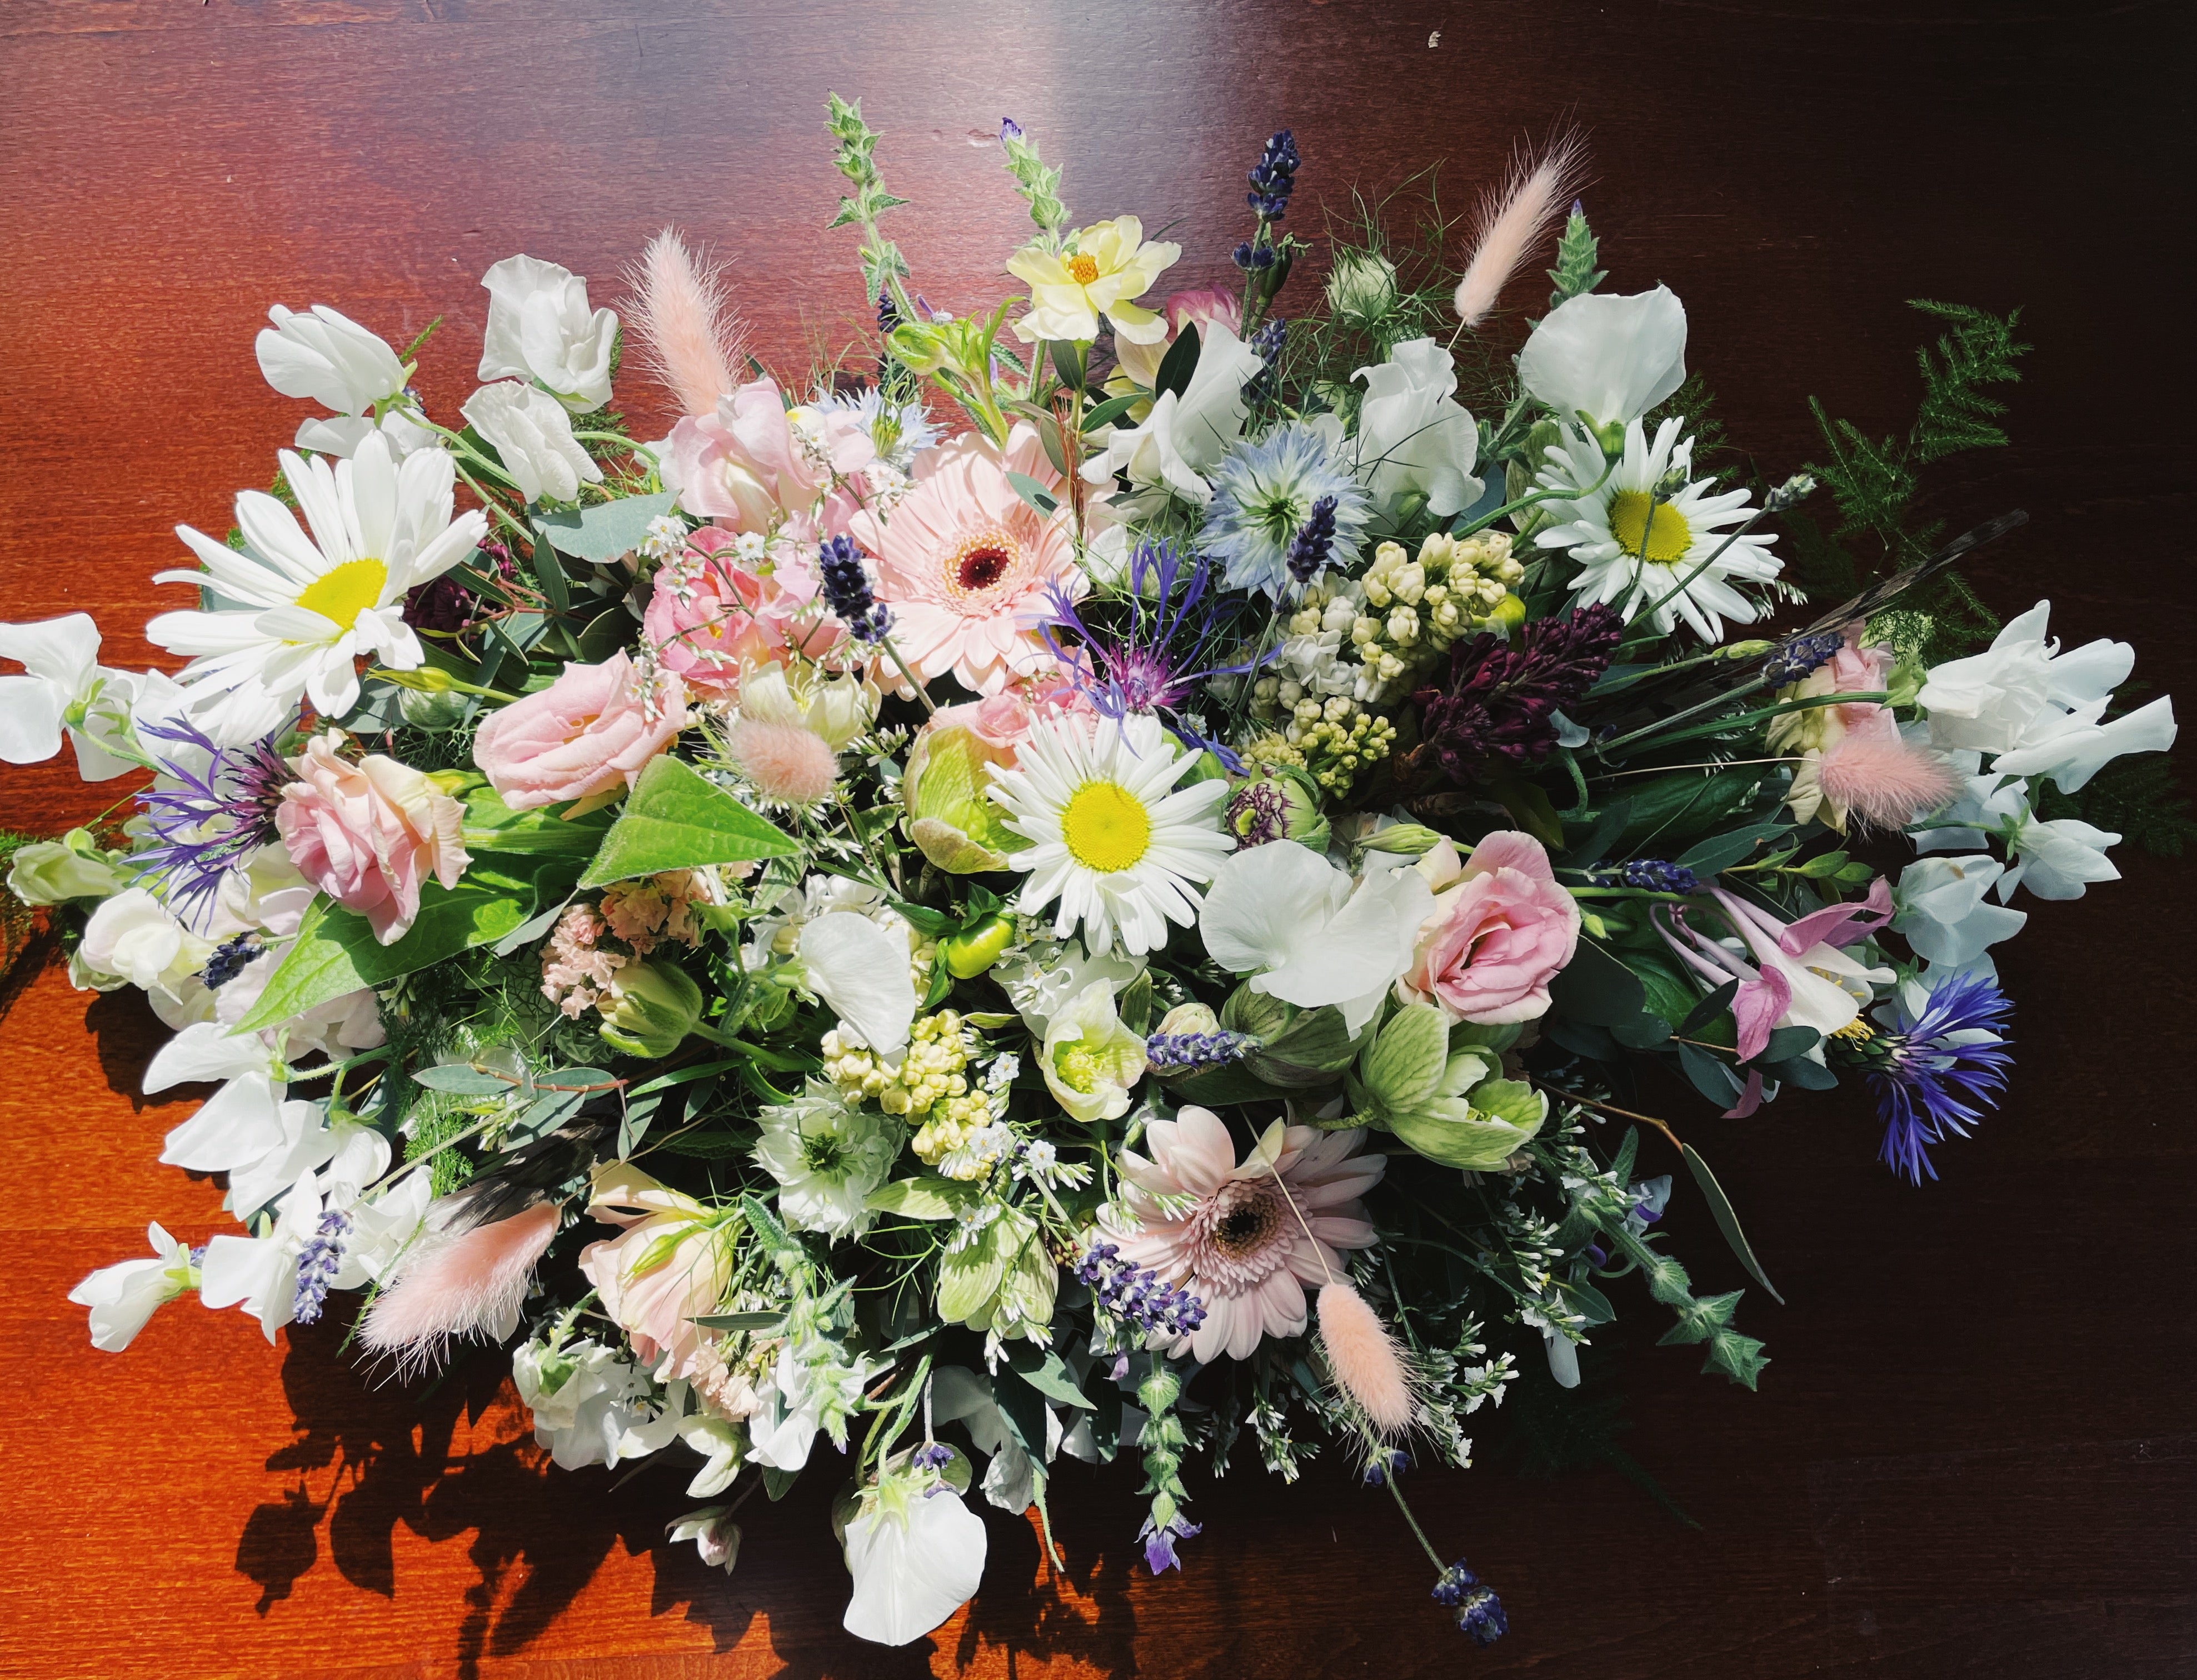 tigerlily florist guernsey flowers delivery wedding flowers wreath workshop funeral flowers